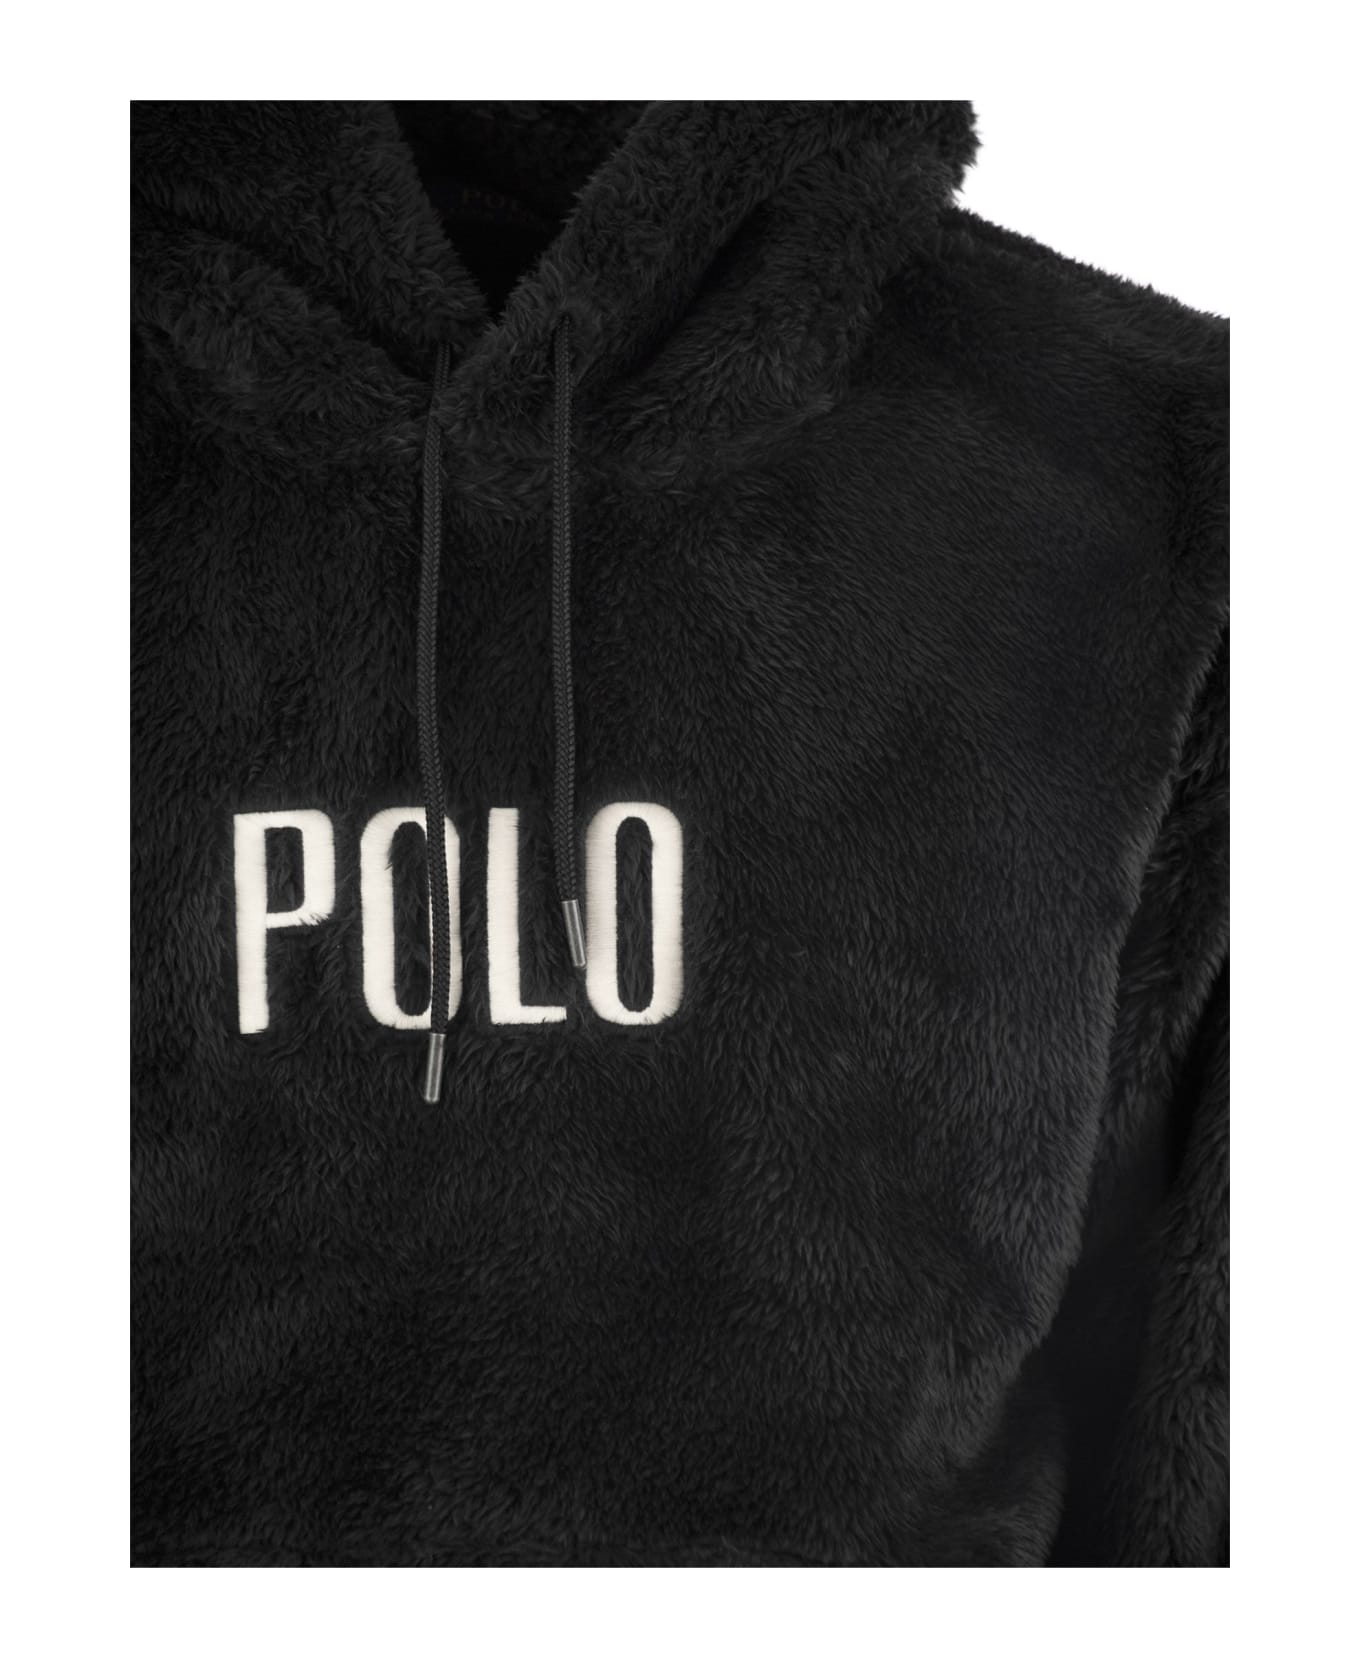 Polo Ralph Lauren Hoodie With Logo - Black